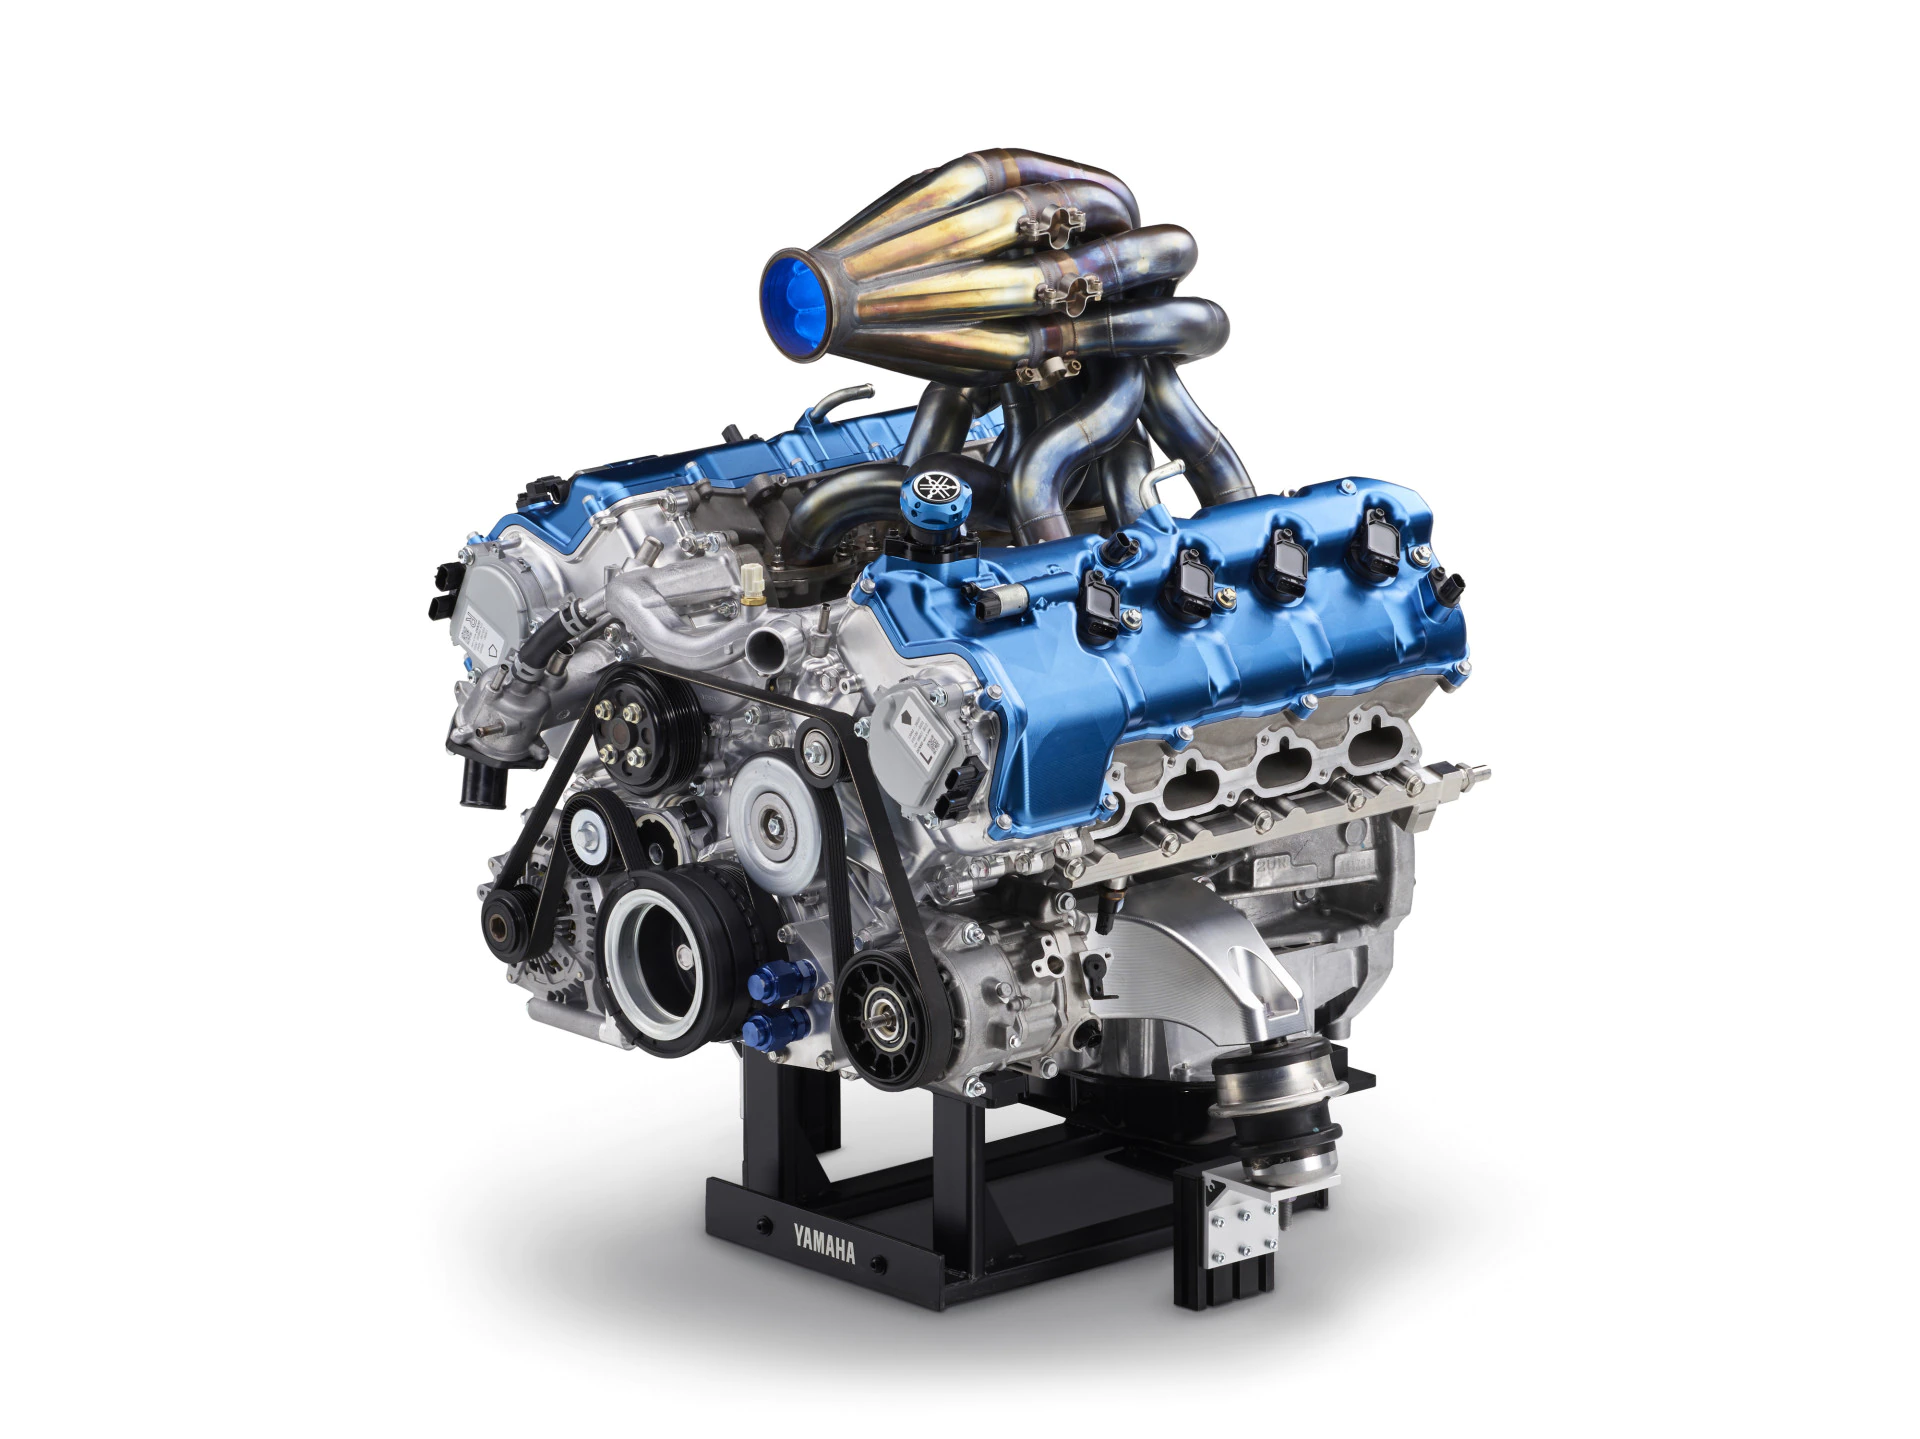 eight-cylinder V-engine - Yamaha - Toyota - hydrogen cars - hydrogen engine